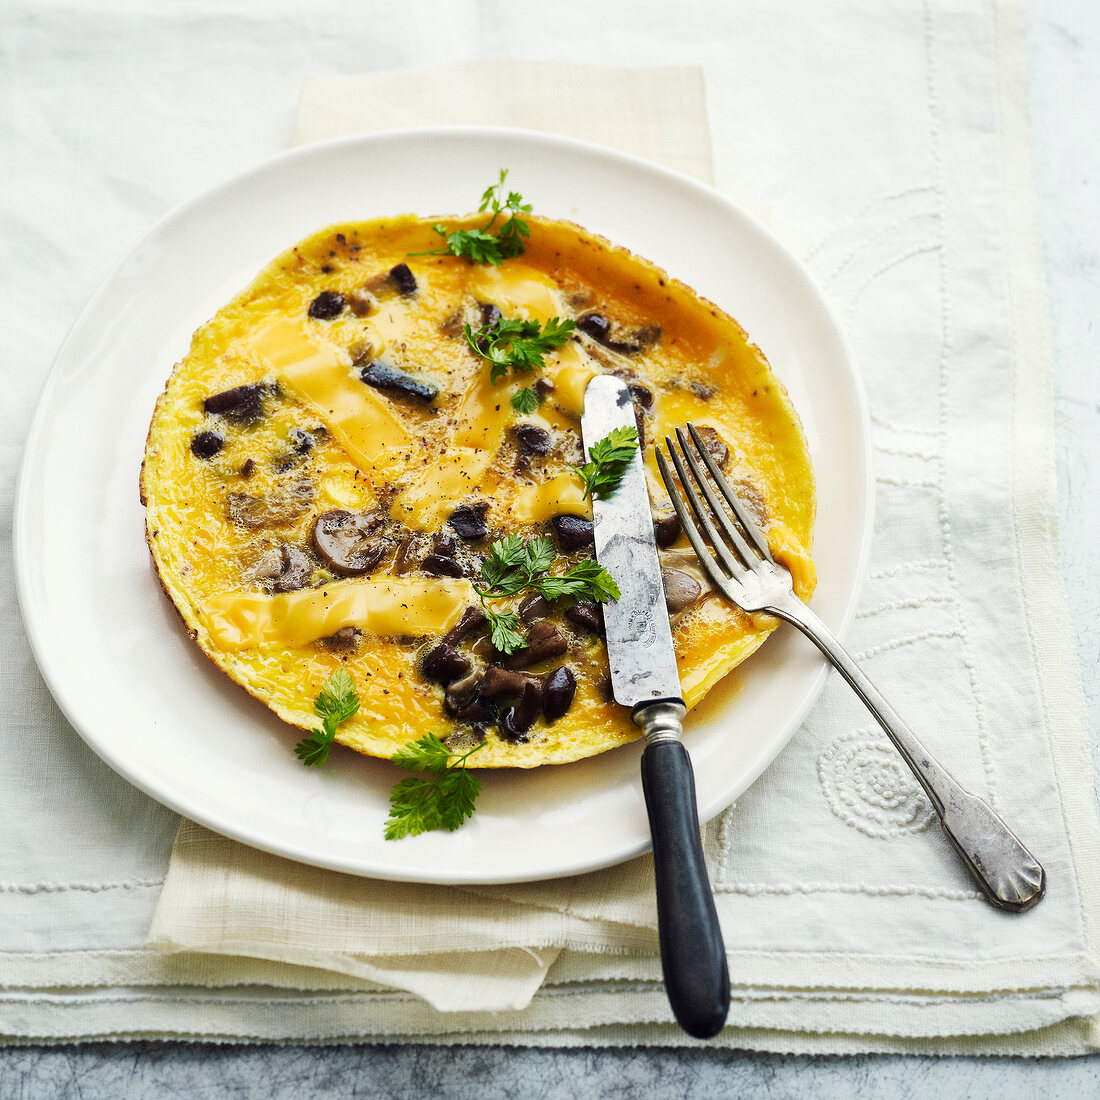 Mushroom and cheddar omelette